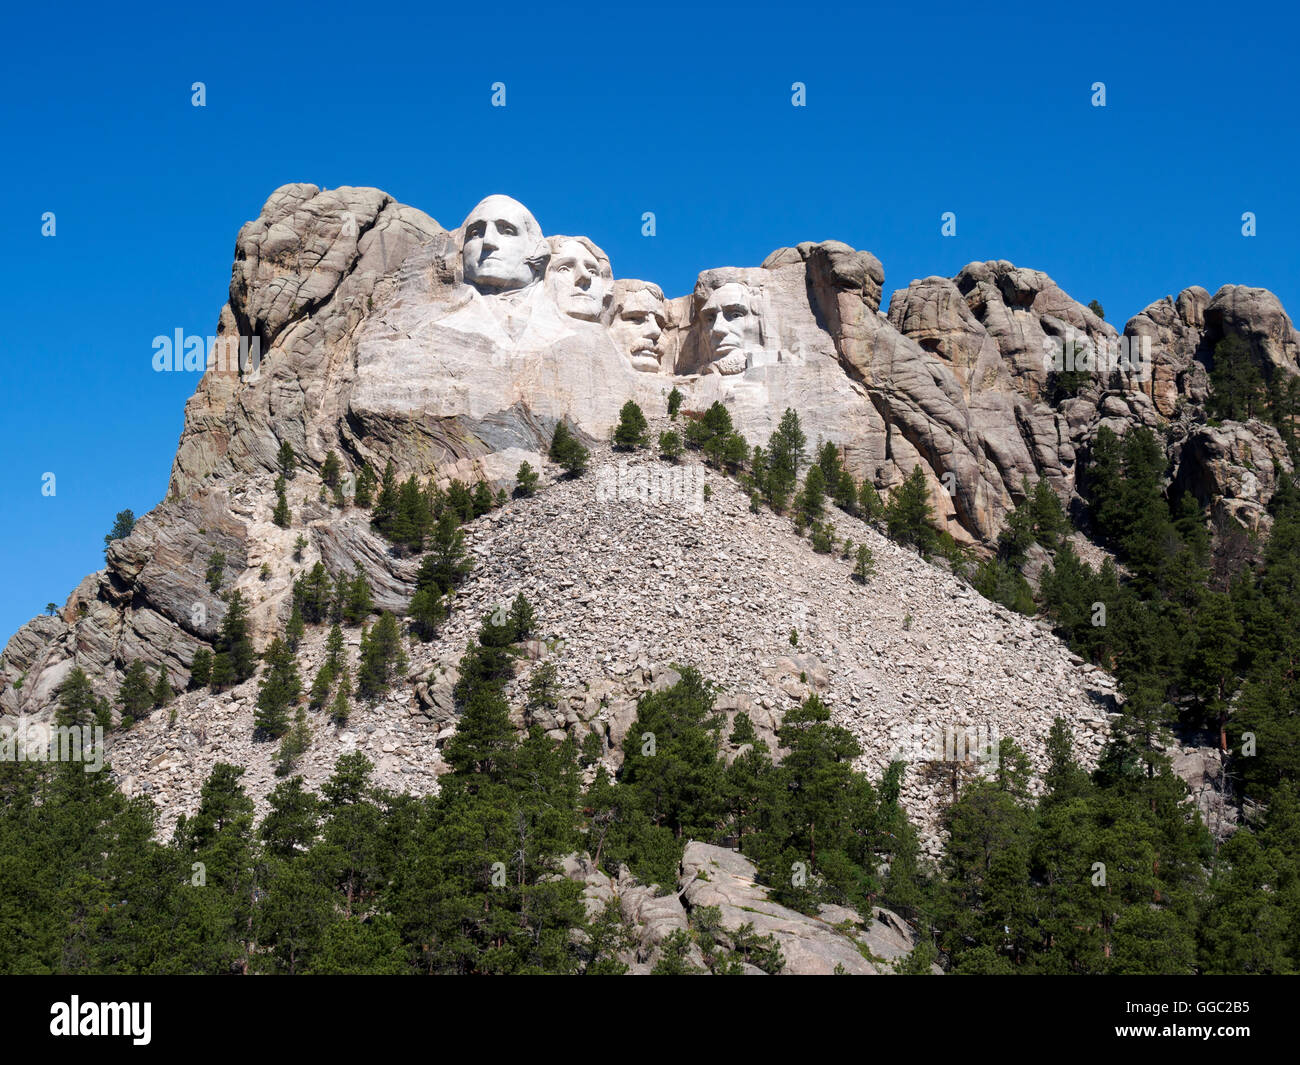 Mt Rushmore National Memorial, le Dakota du Sud Banque D'Images